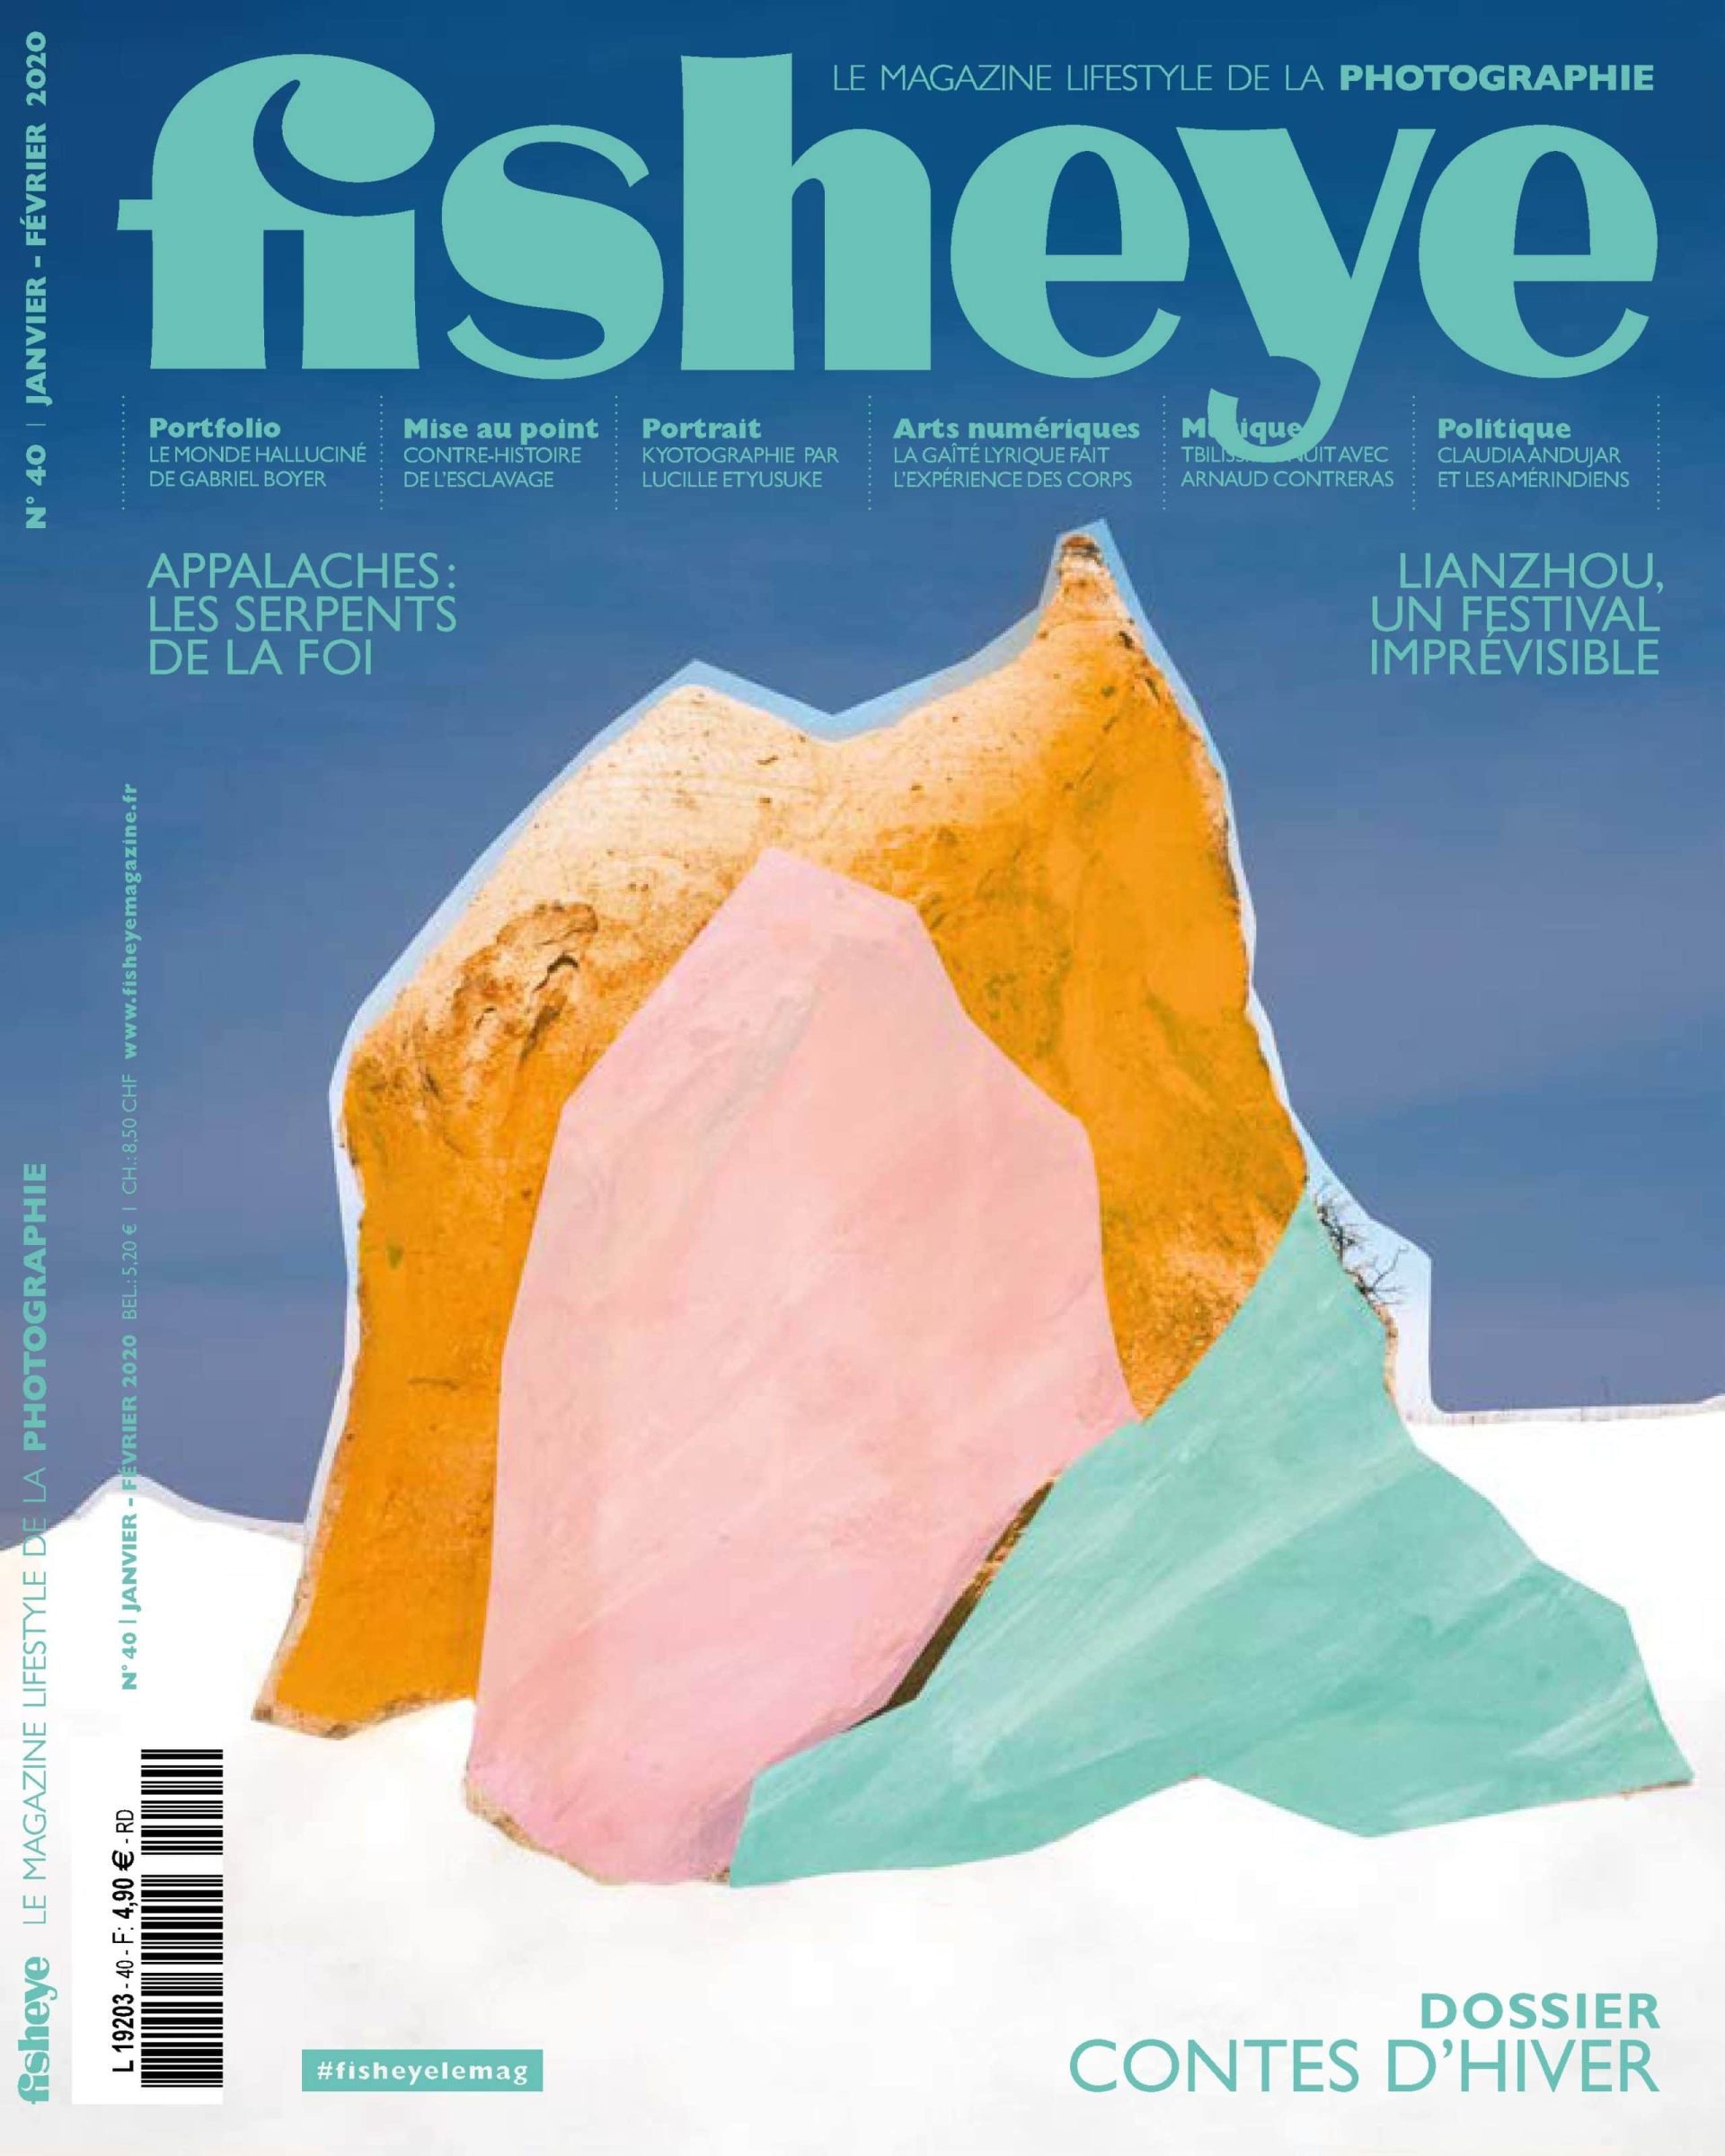 Fisheye Magazine #40 Contes d’hiver